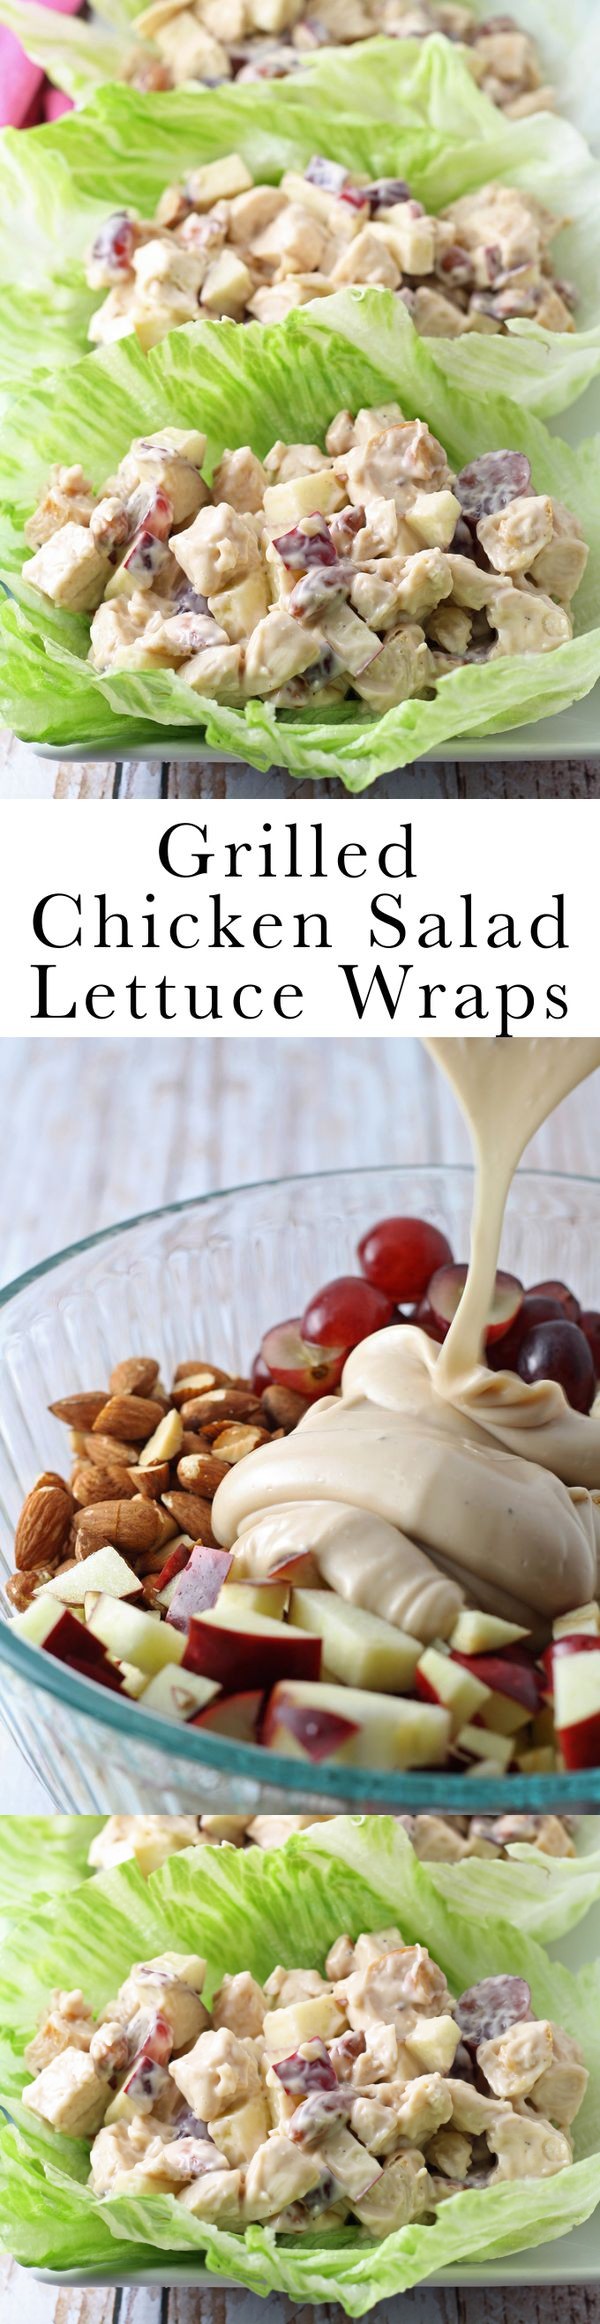 Grilled Chicken Salad Lettuce Wraps